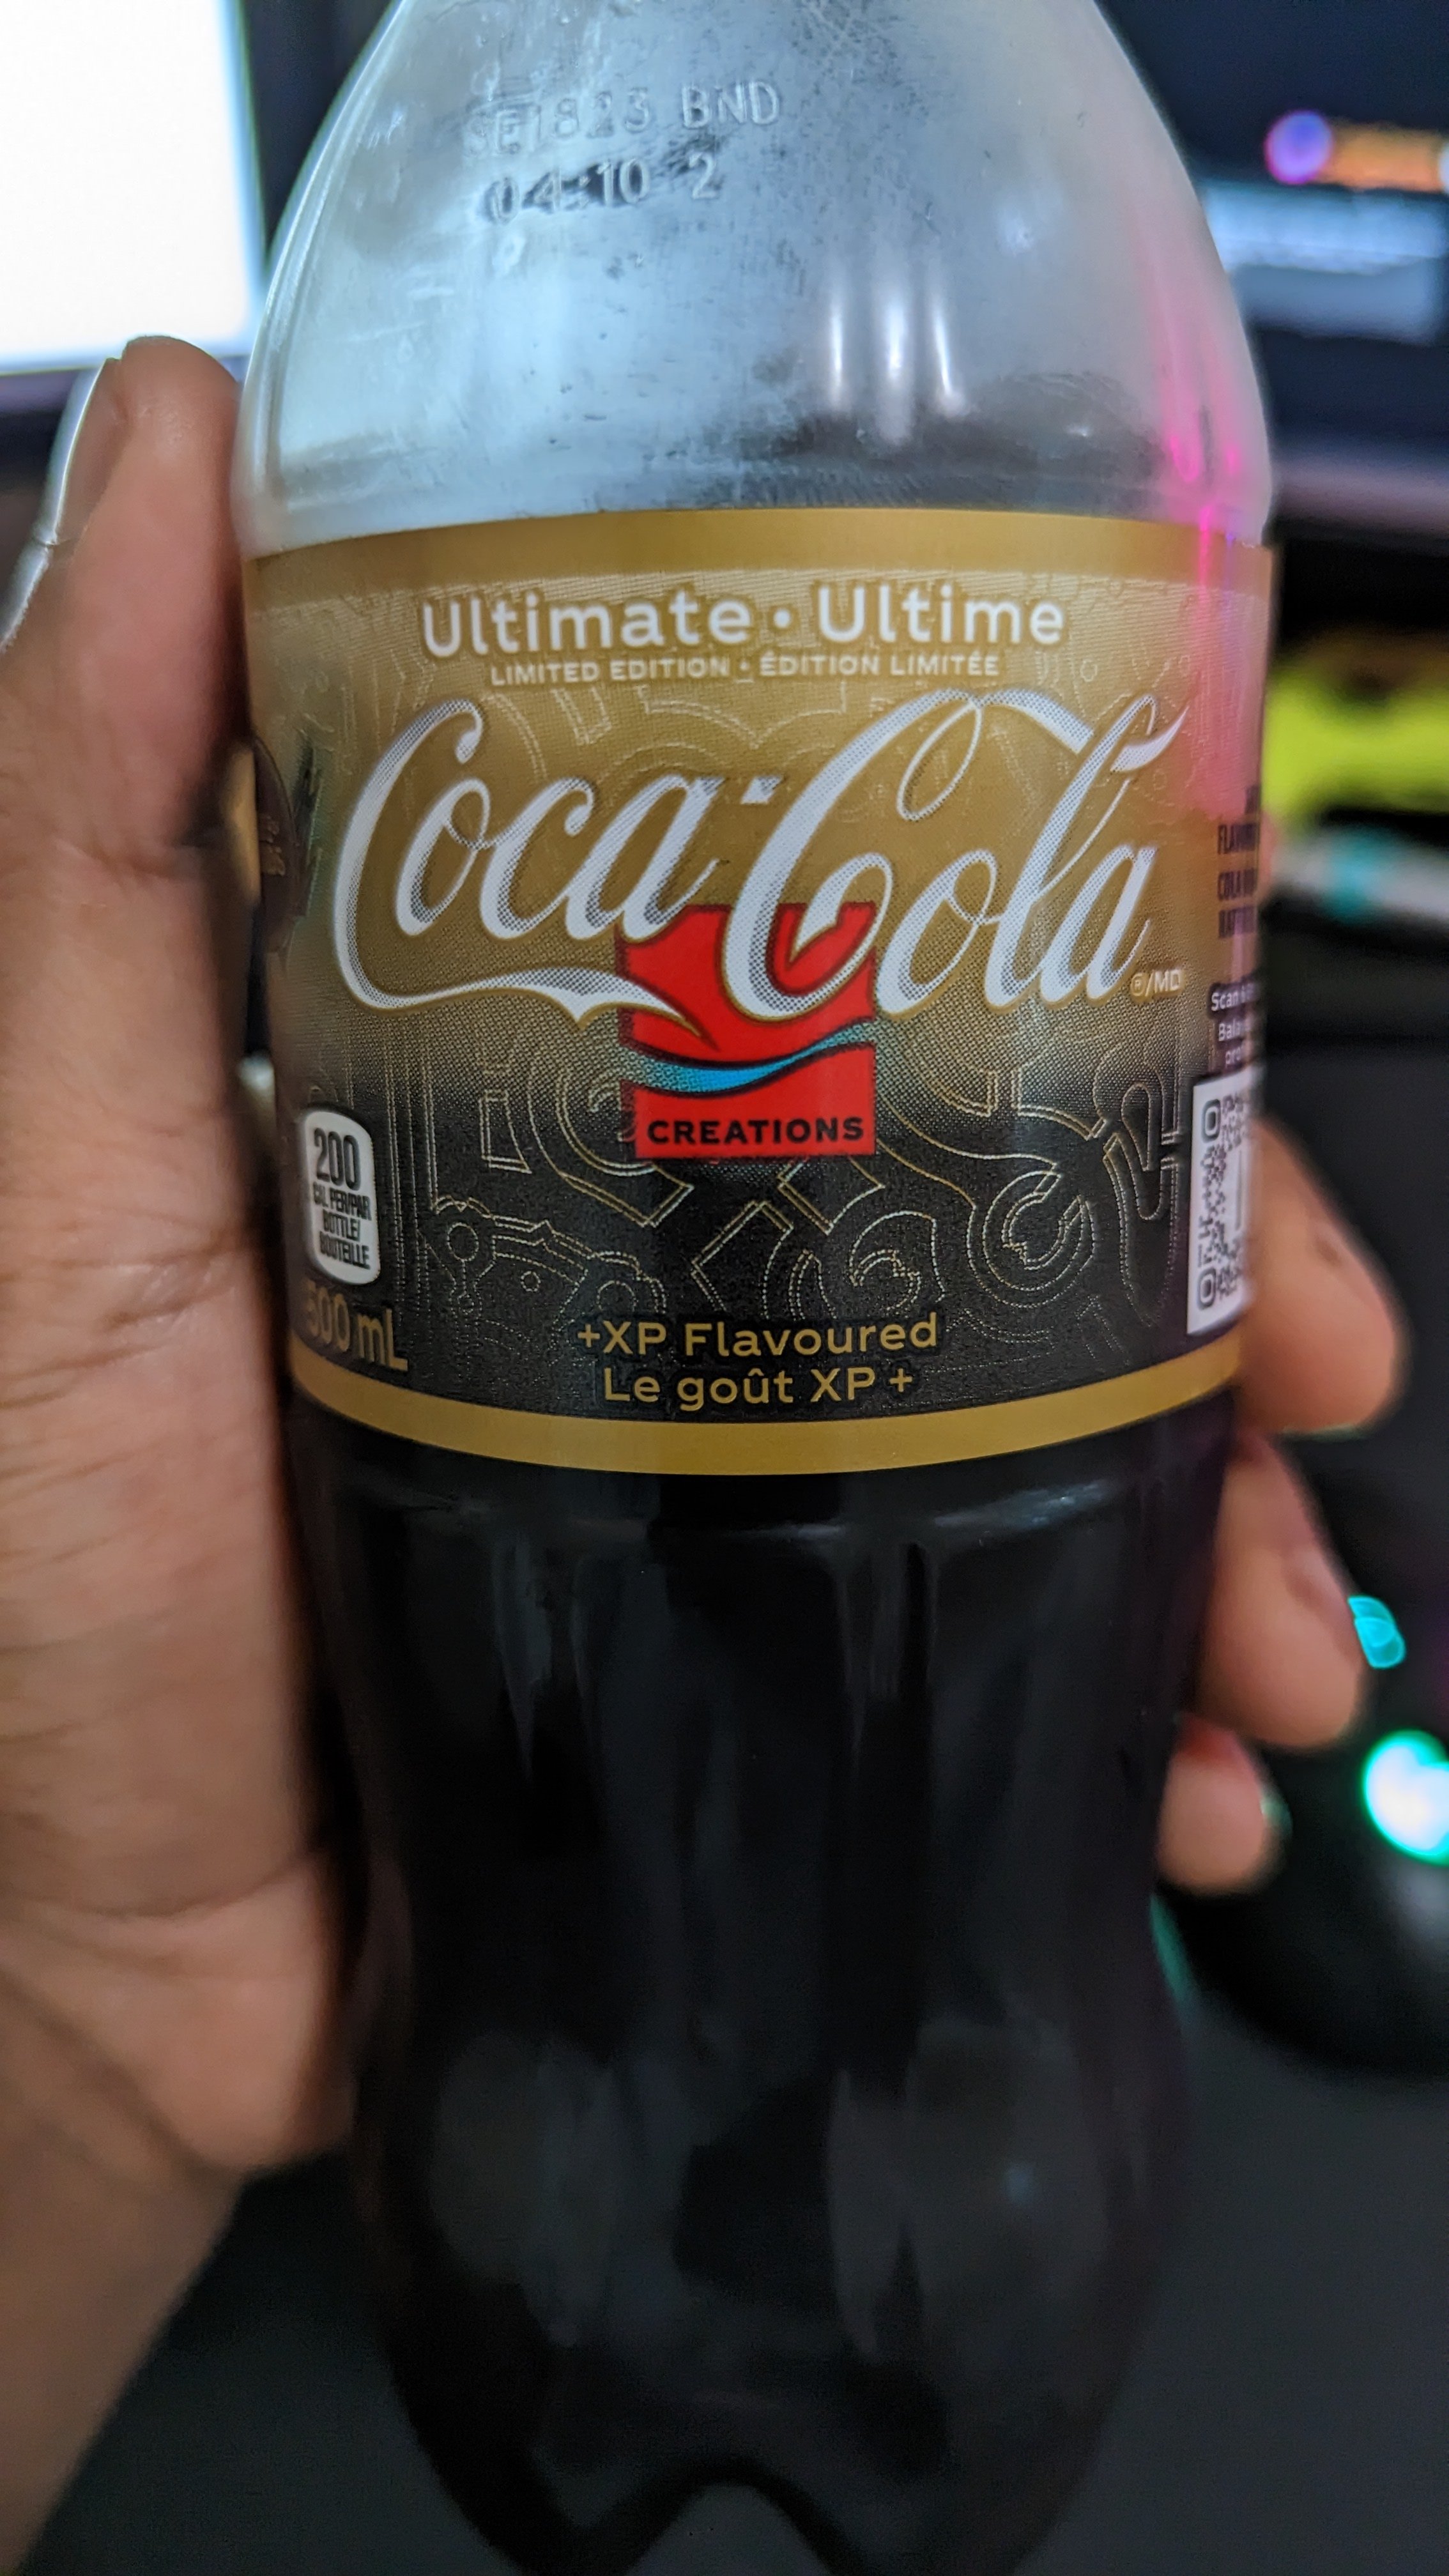 Coca Cola Vanilla Bouteille 500ml